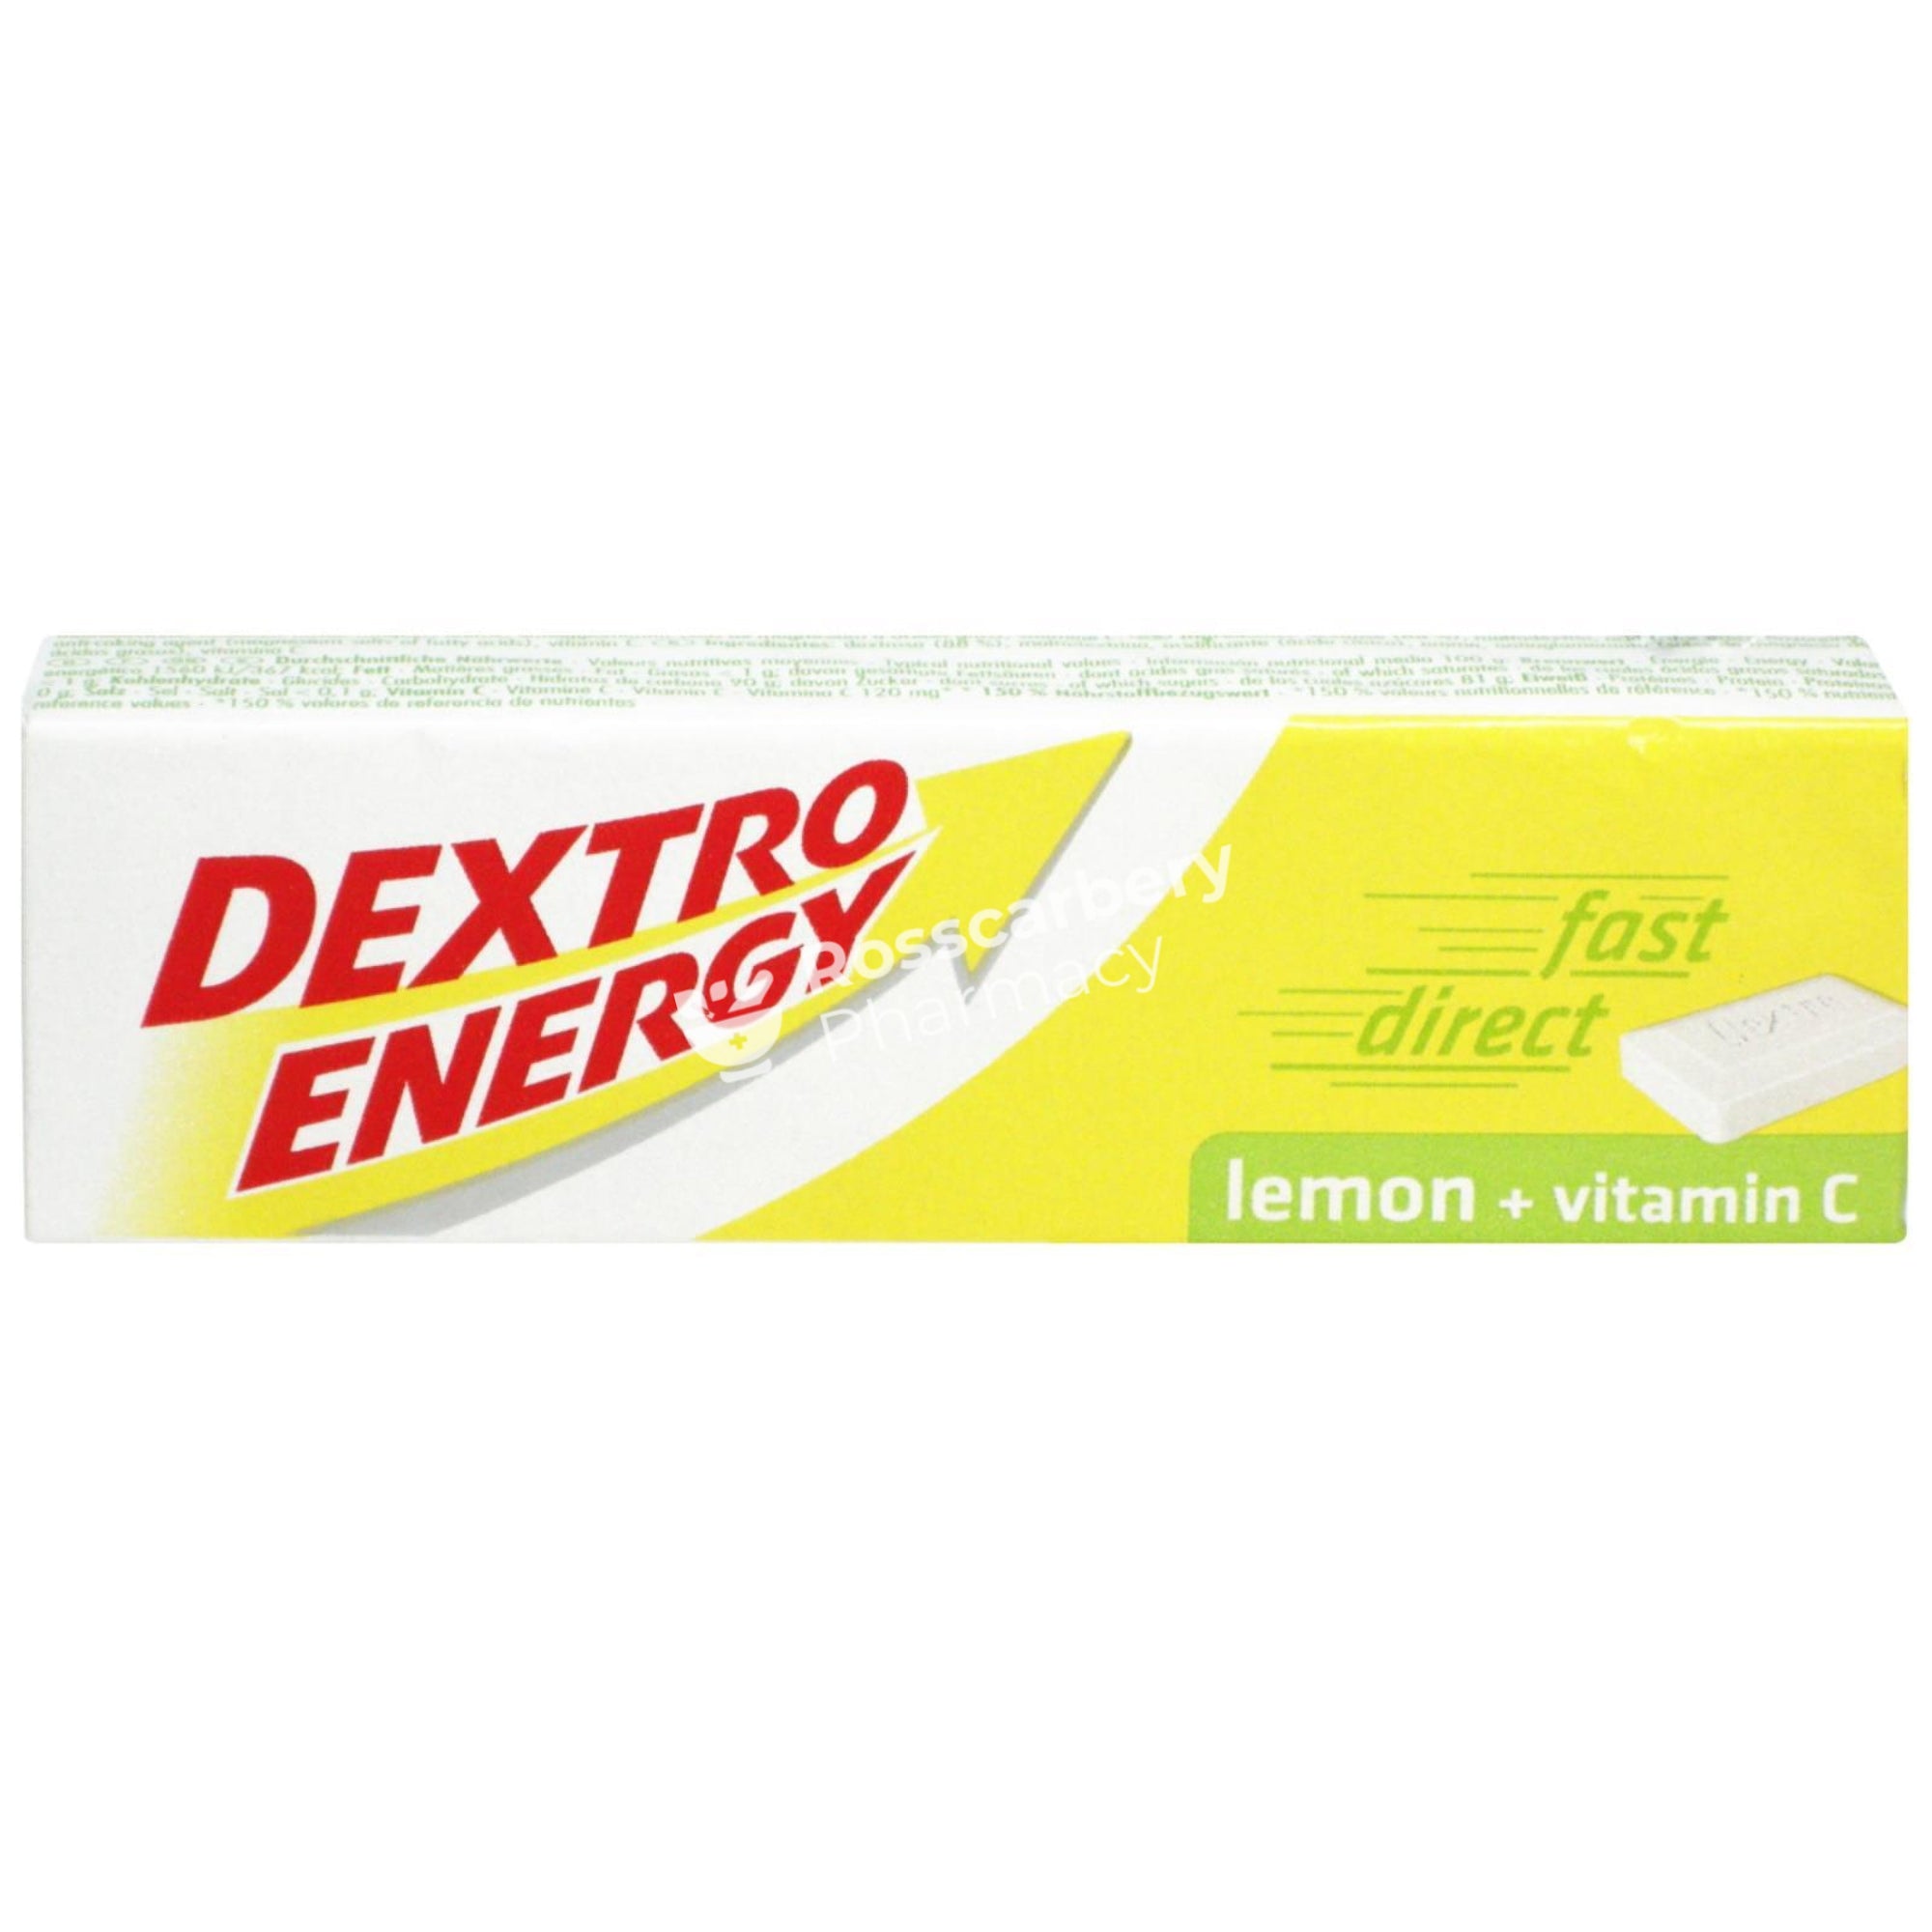 Dextro Energy - Lemon + Vitamin C Sweets/lozenges/pastilles